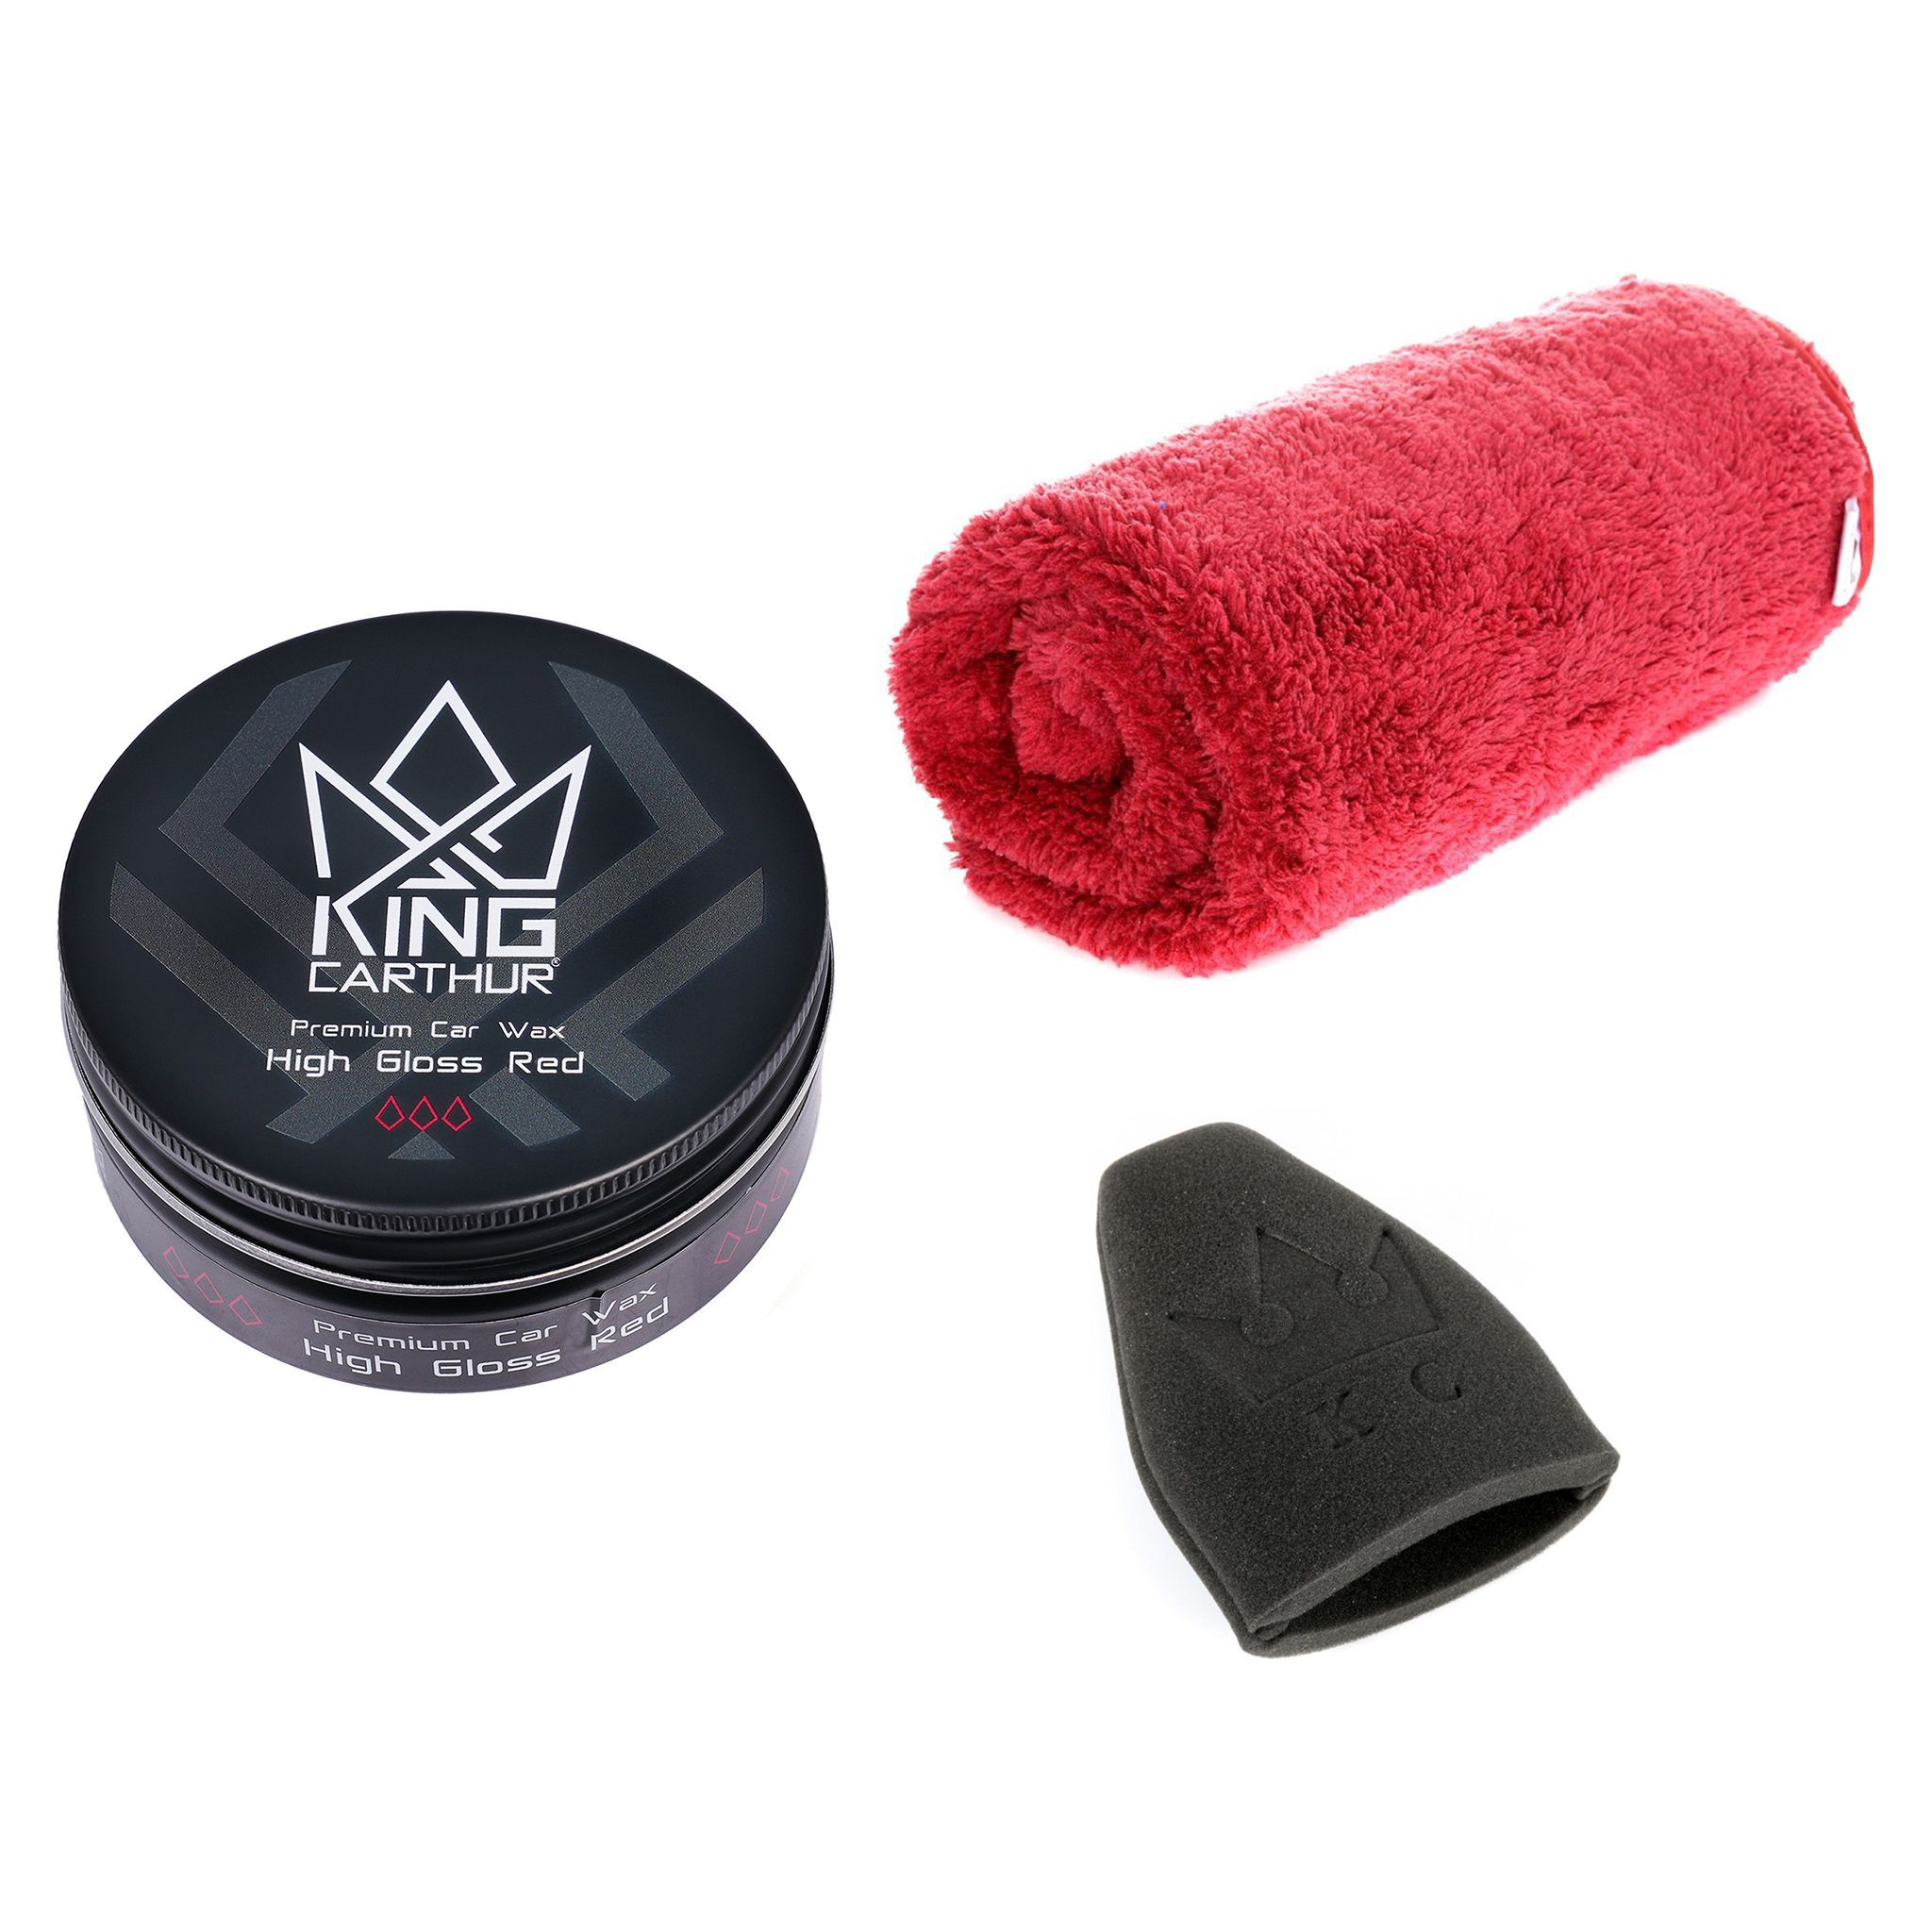 Bilvax King Carthur High Gloss Red #26, 180 g, Vax + Applikator + Polerduk